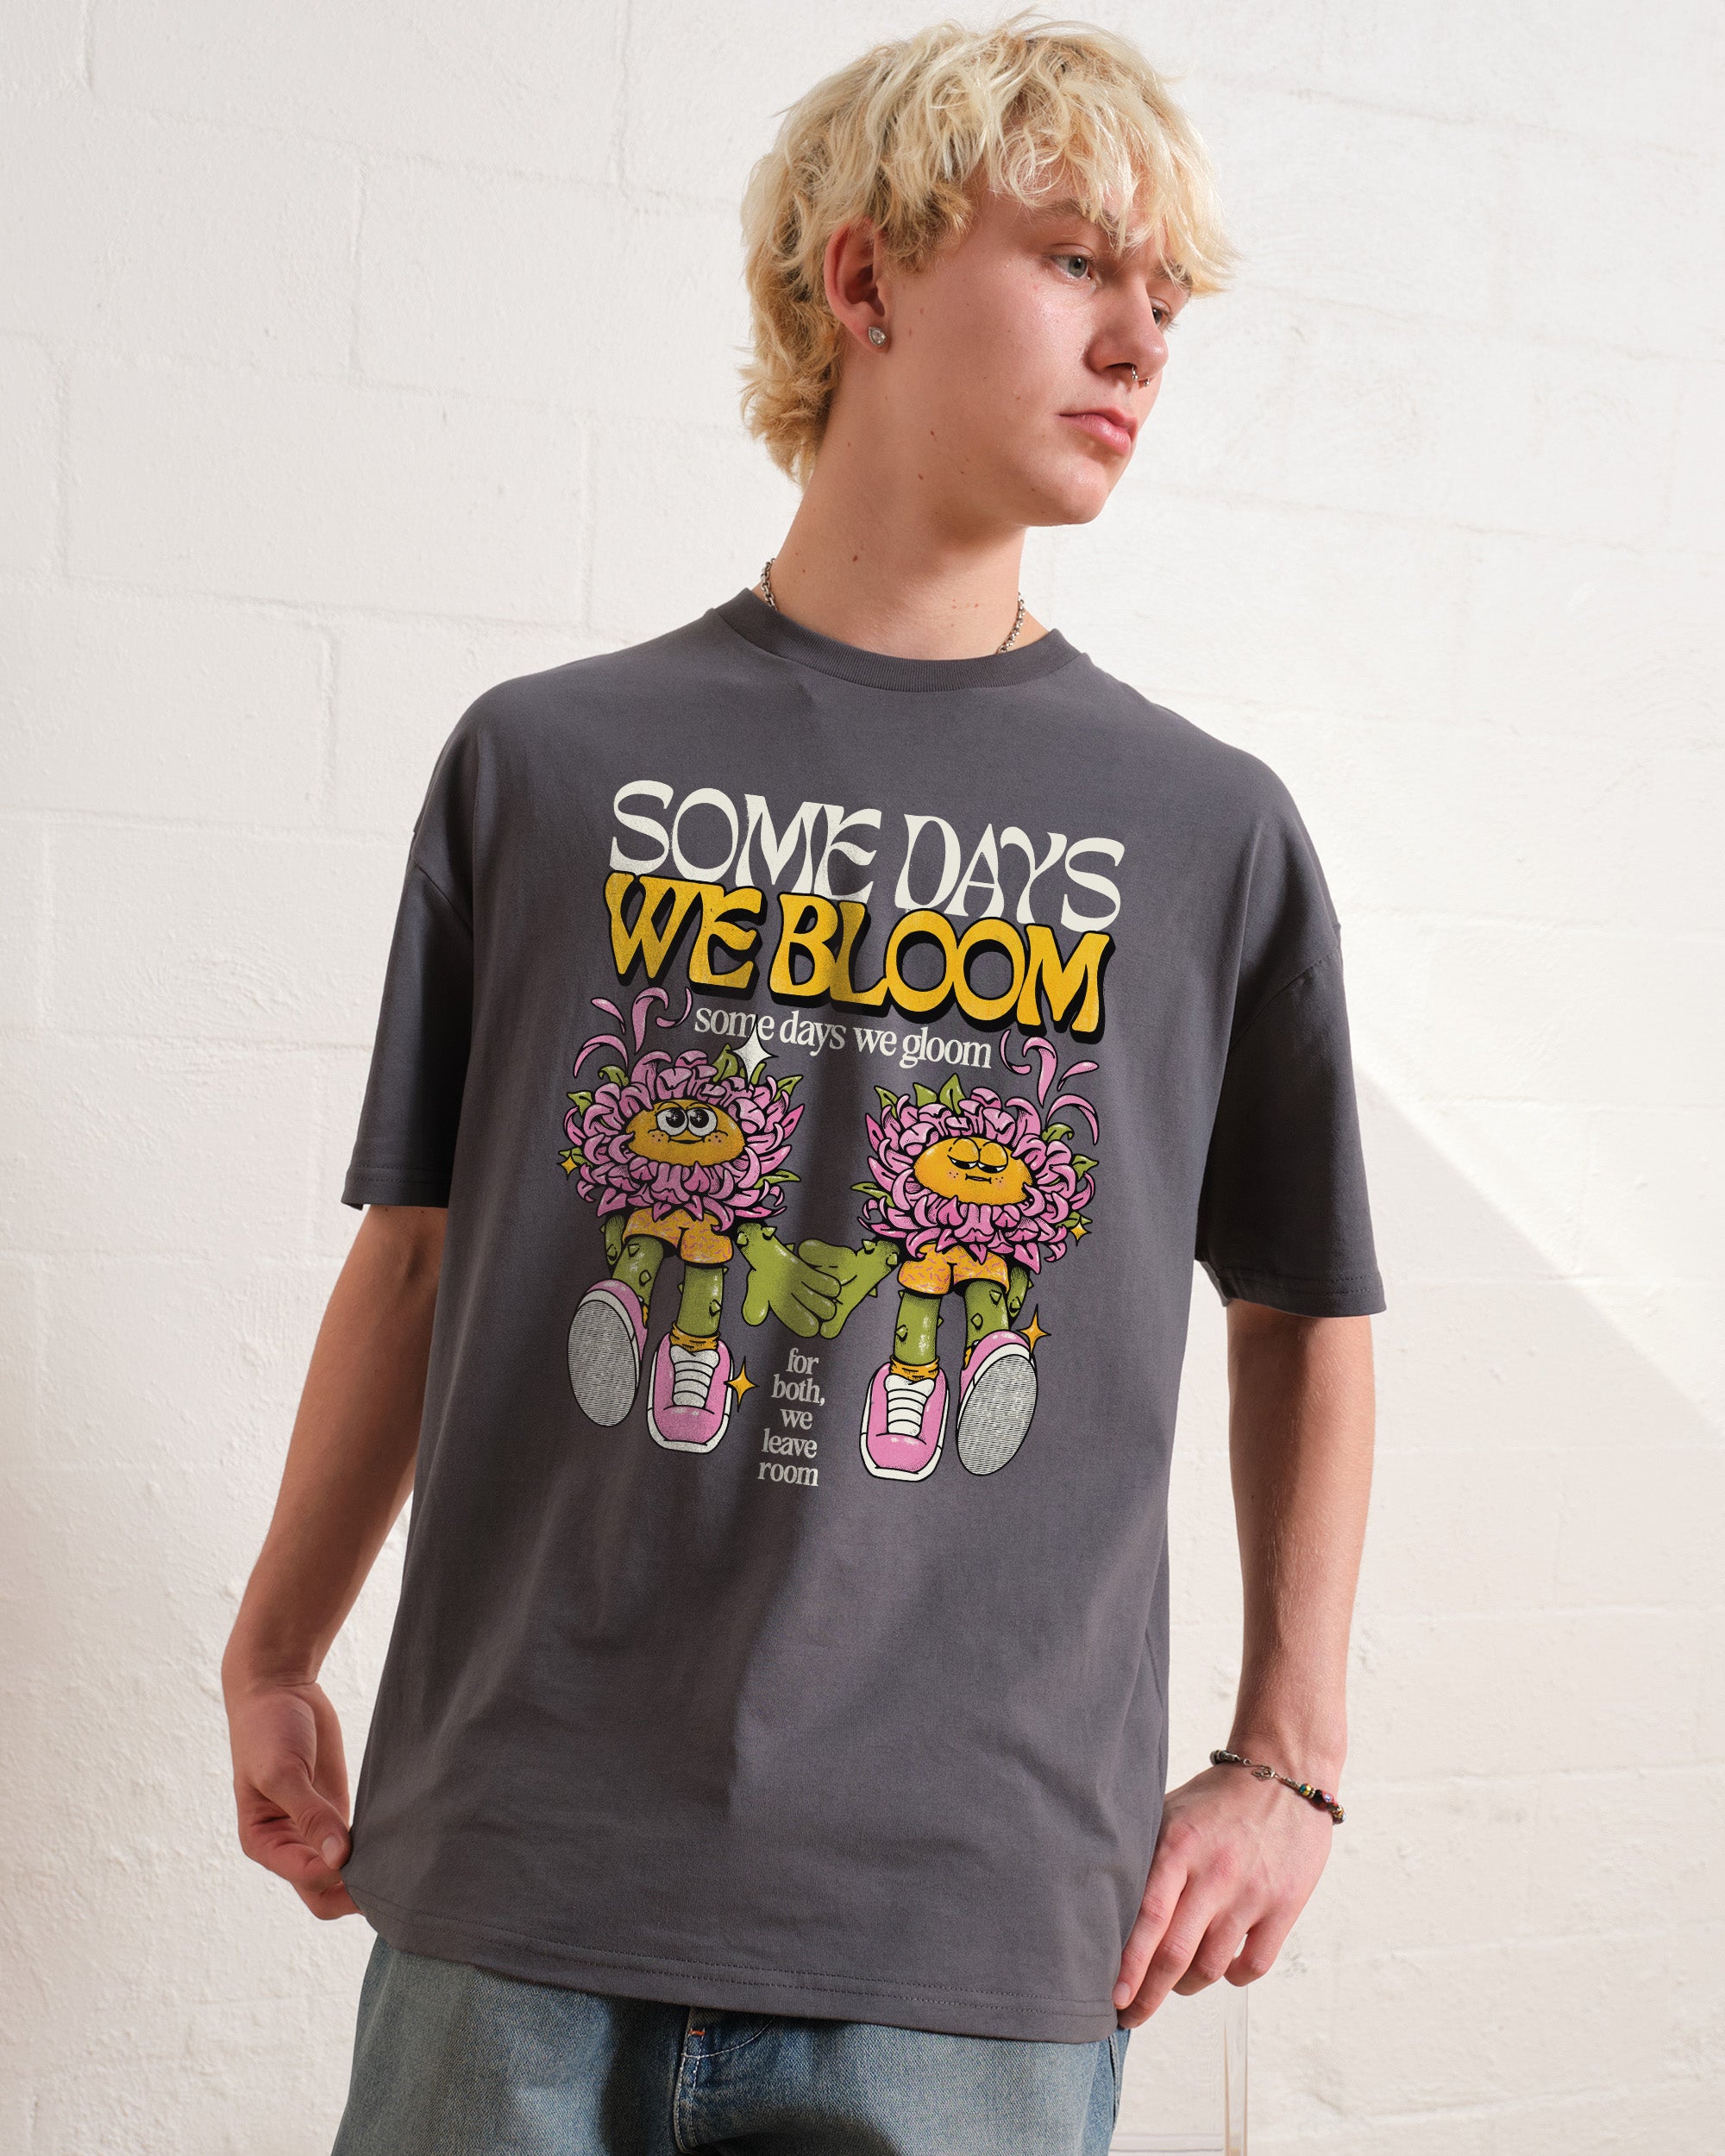 We Bloom T-Shirt Australia Online